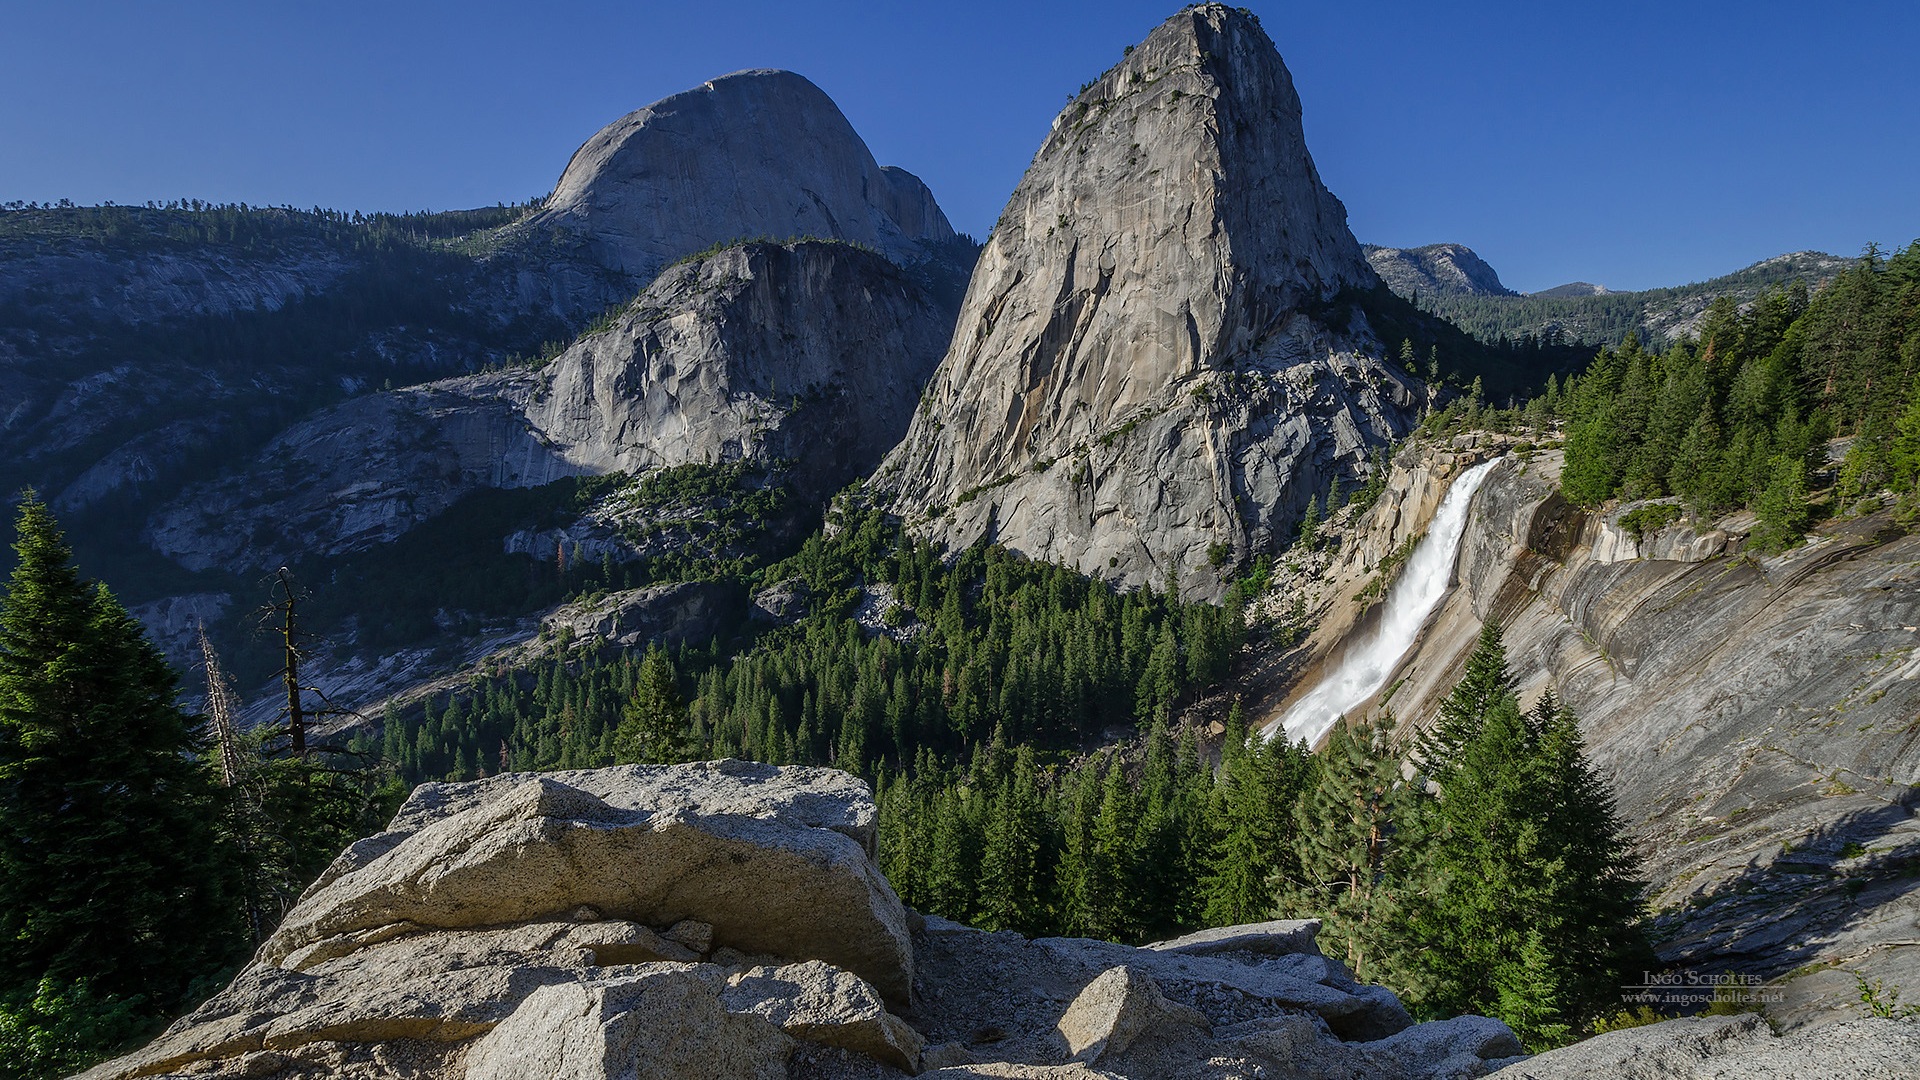 Windows 8 Thema, Yosemite National Park HD Wallpaper #11 - 1920x1080